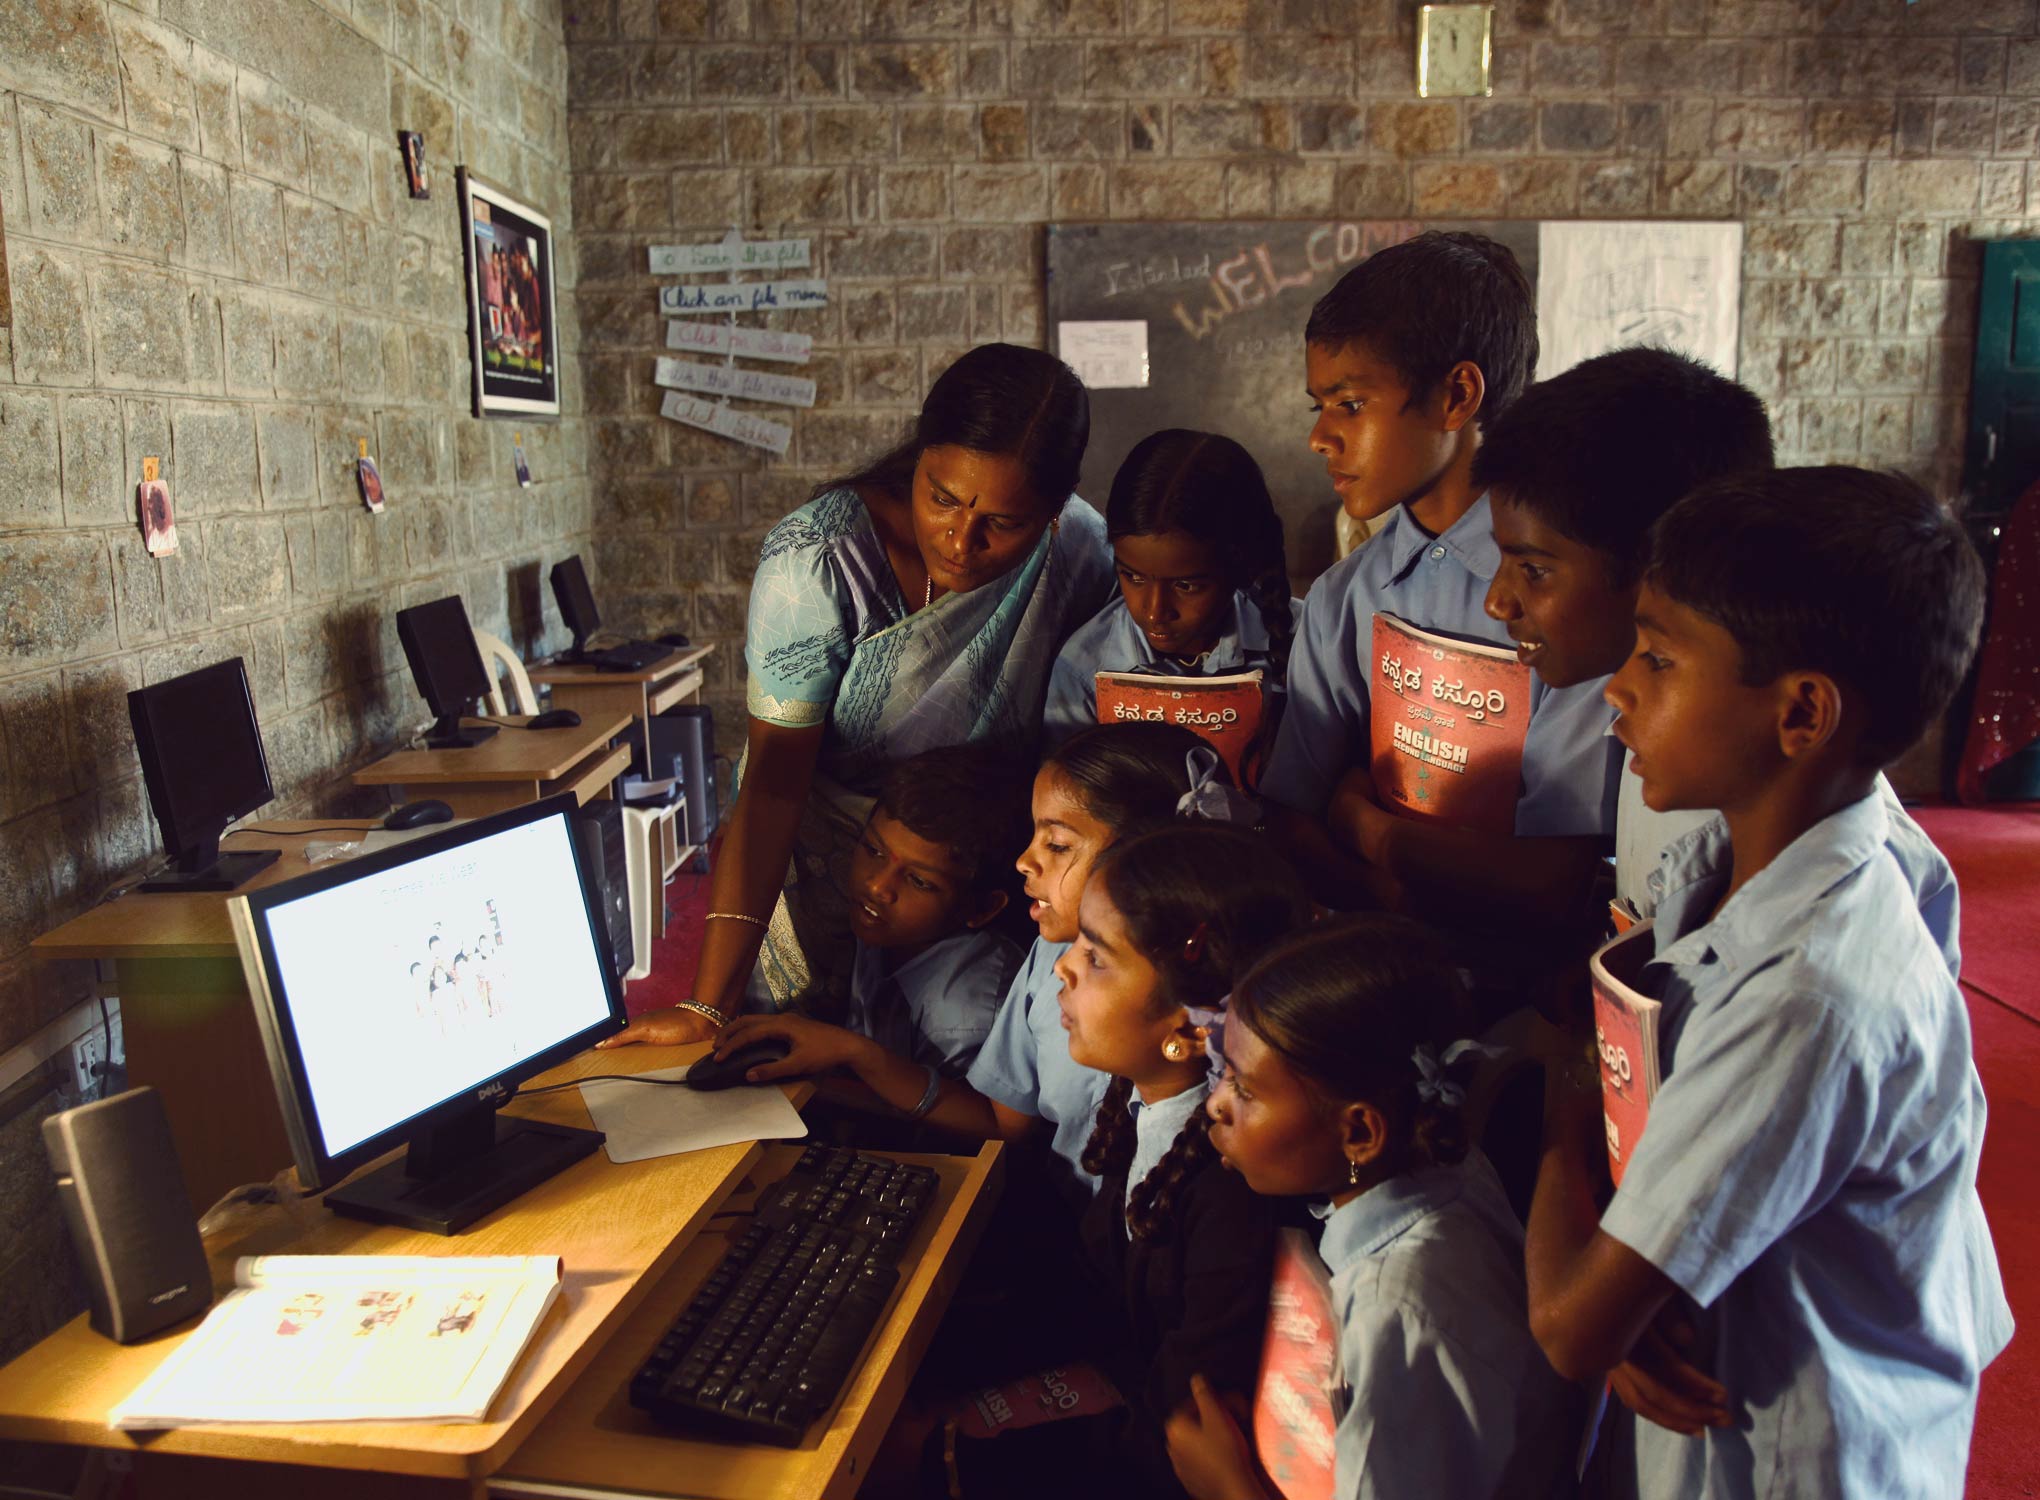 digital literacy in India